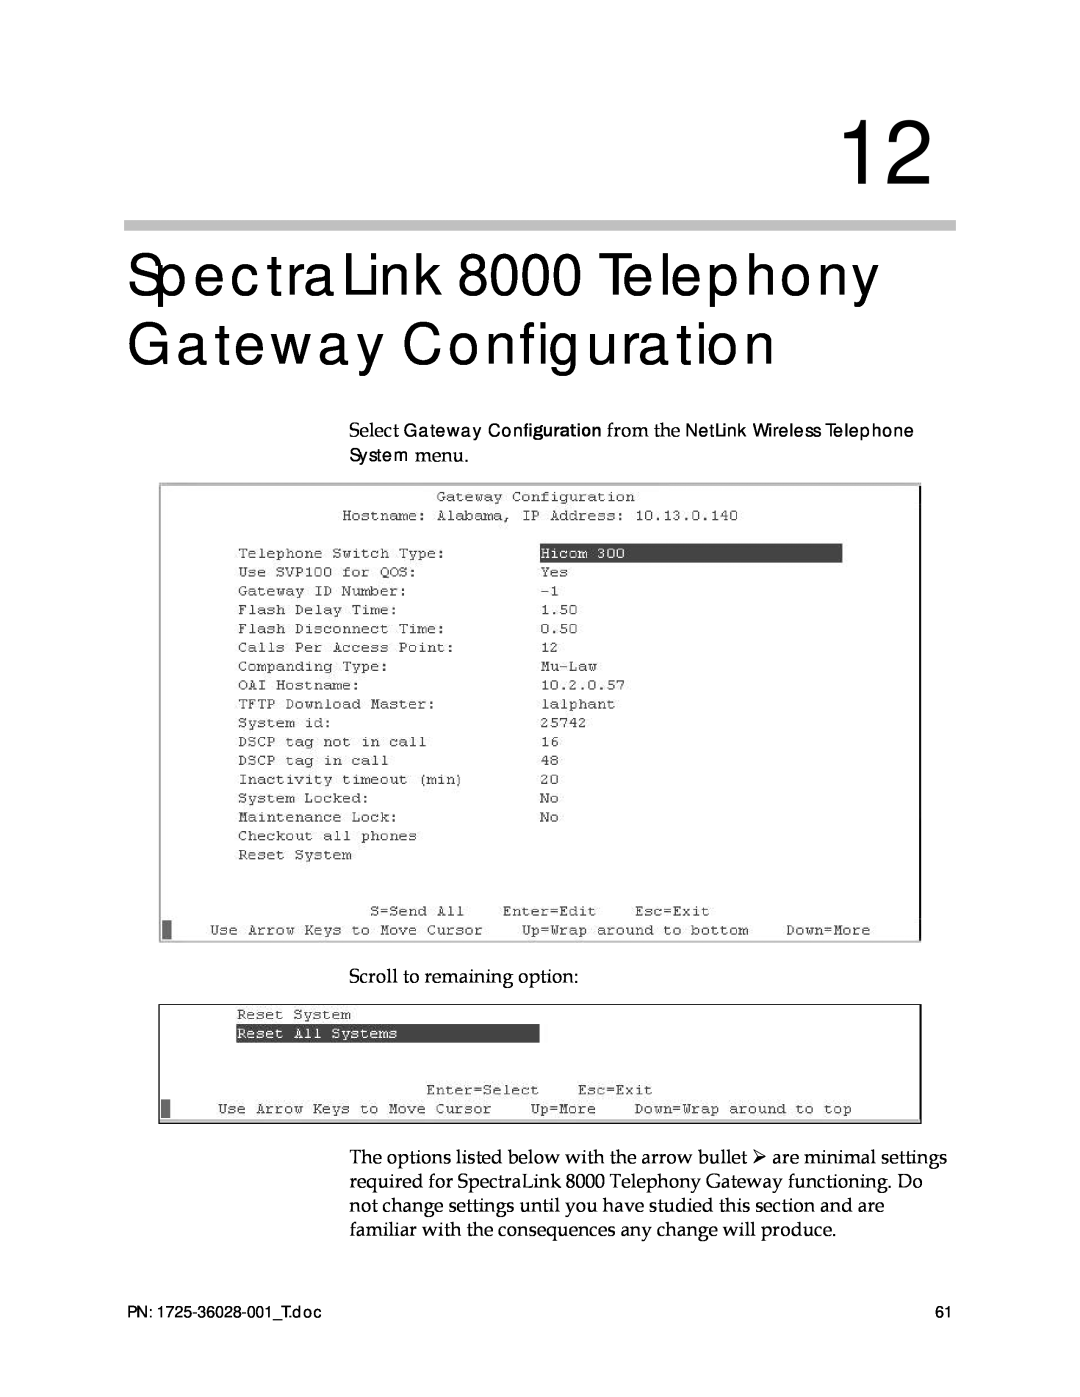 Polycom 1725-36028-001 manual SpectraLink 8000 Telephony Gateway Configuration 